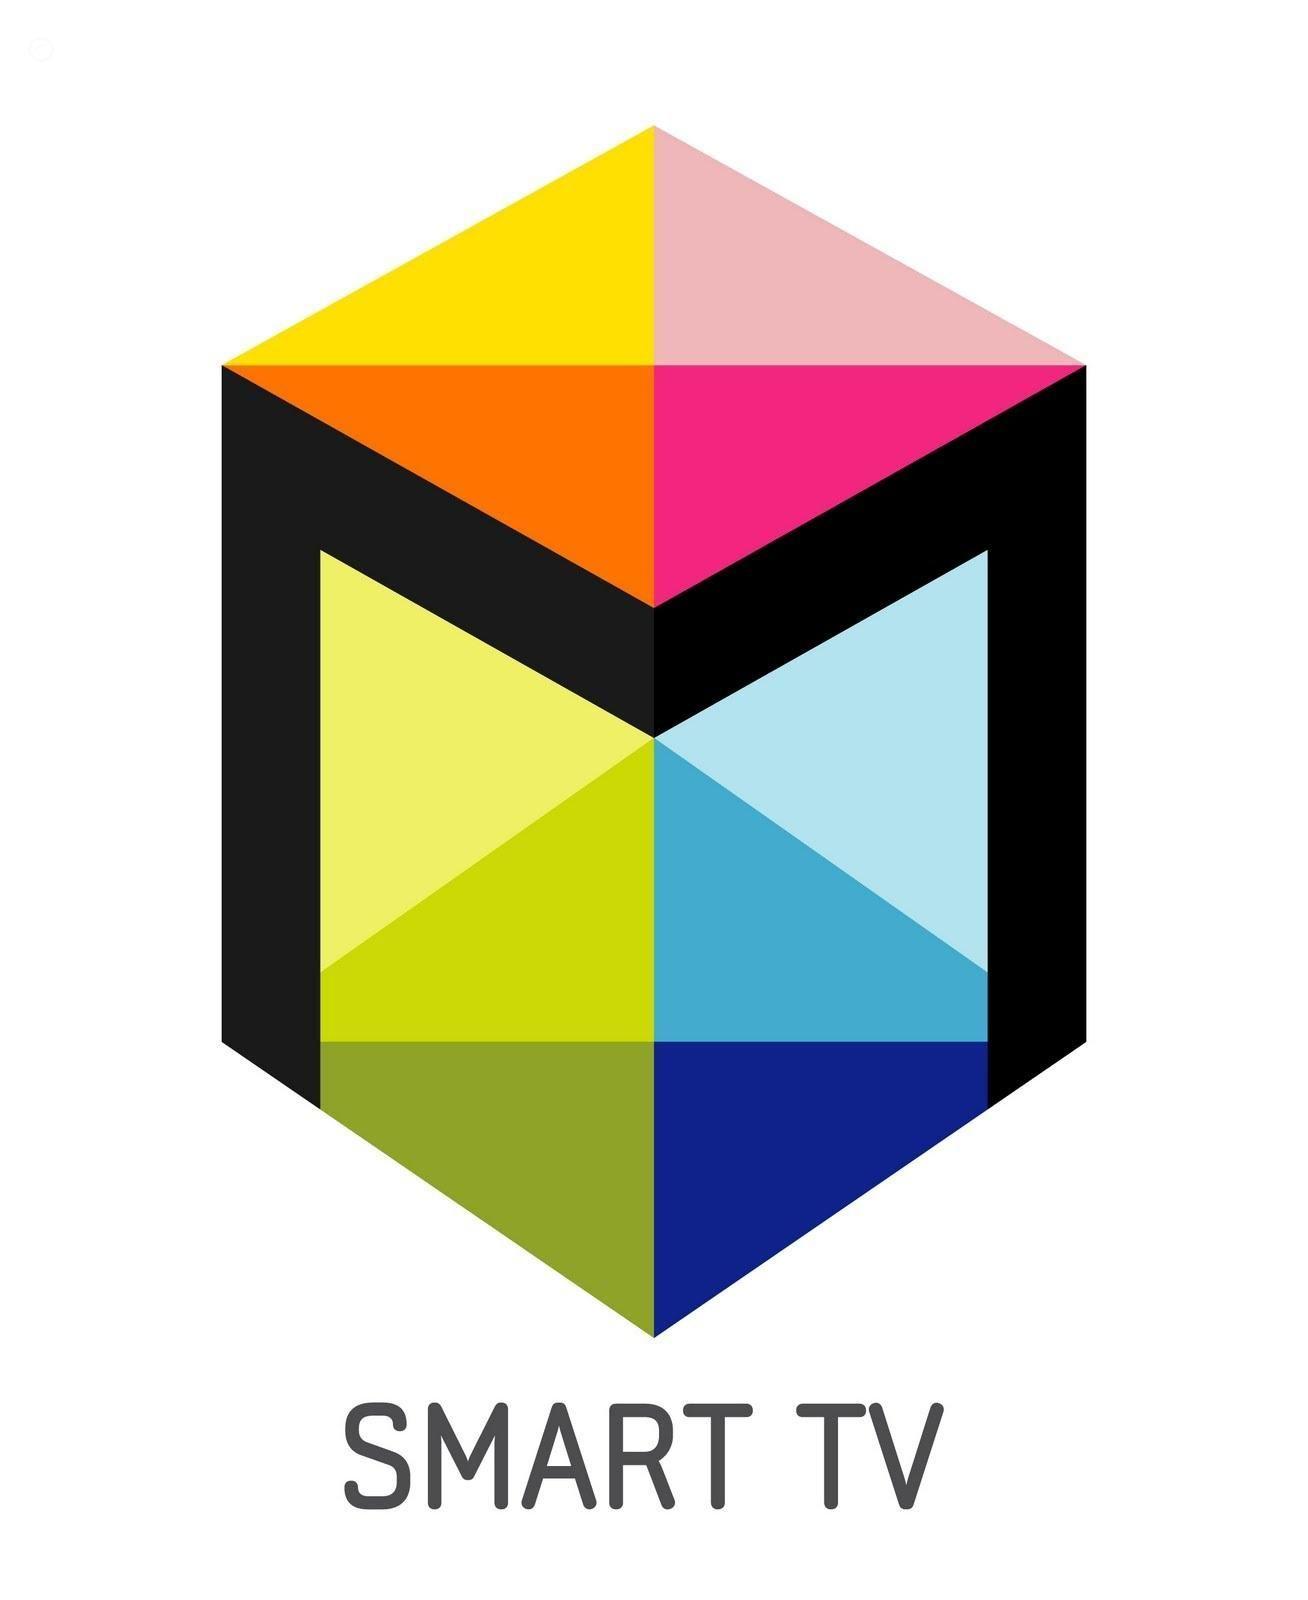 Smart TV Logo - Logos. Smart TV, Samsung smart tv, Branding